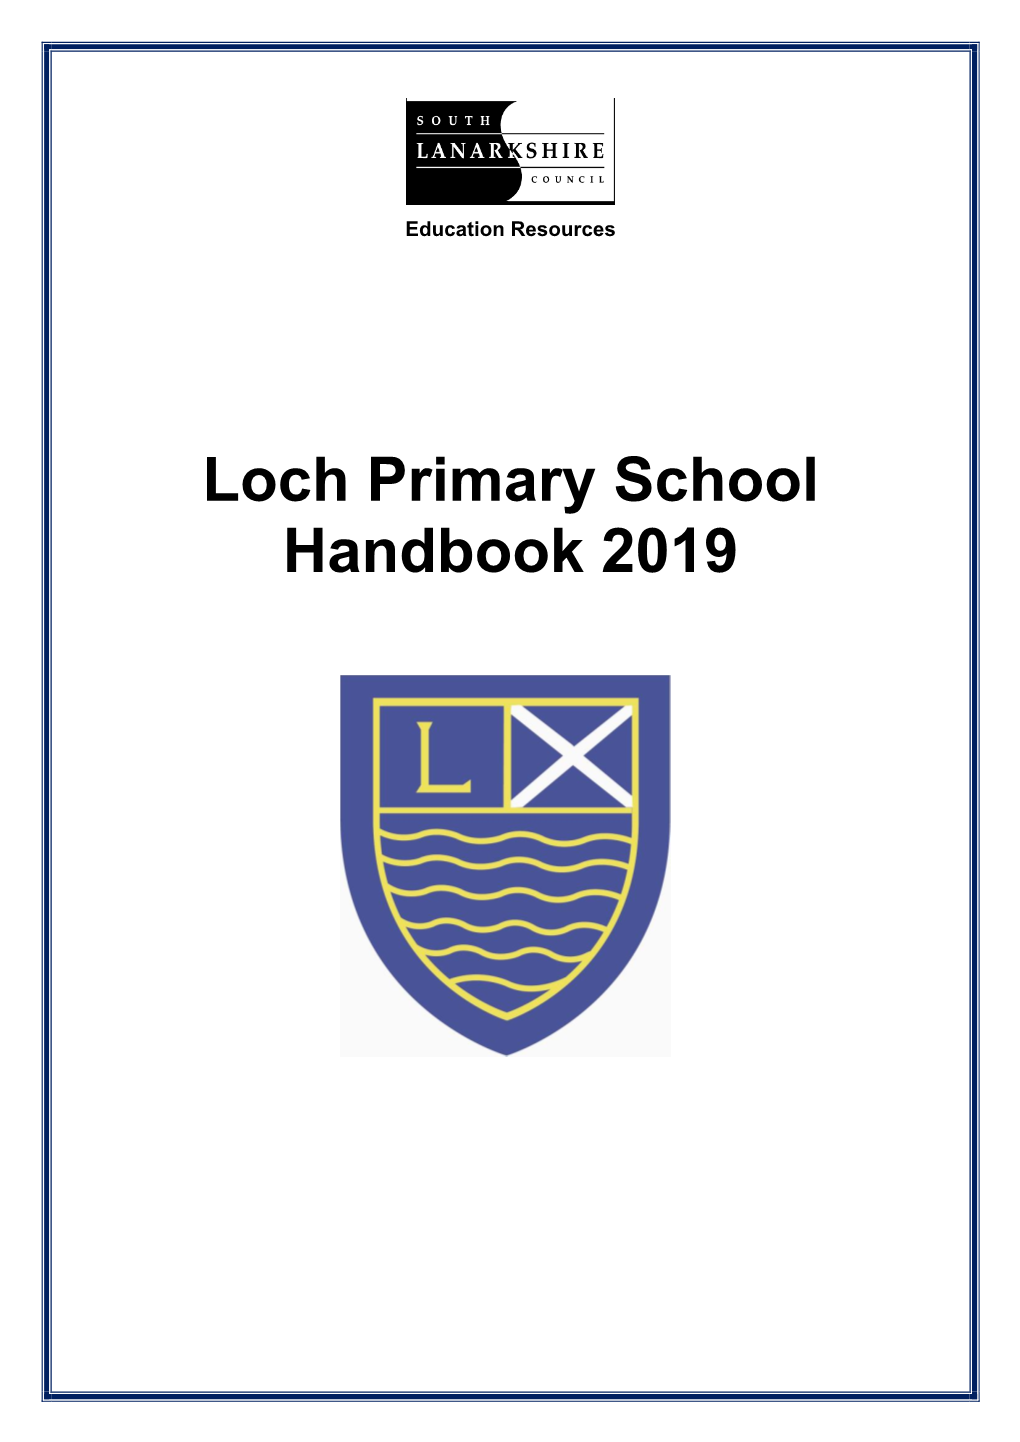 Loch Primary School Handbook 2019